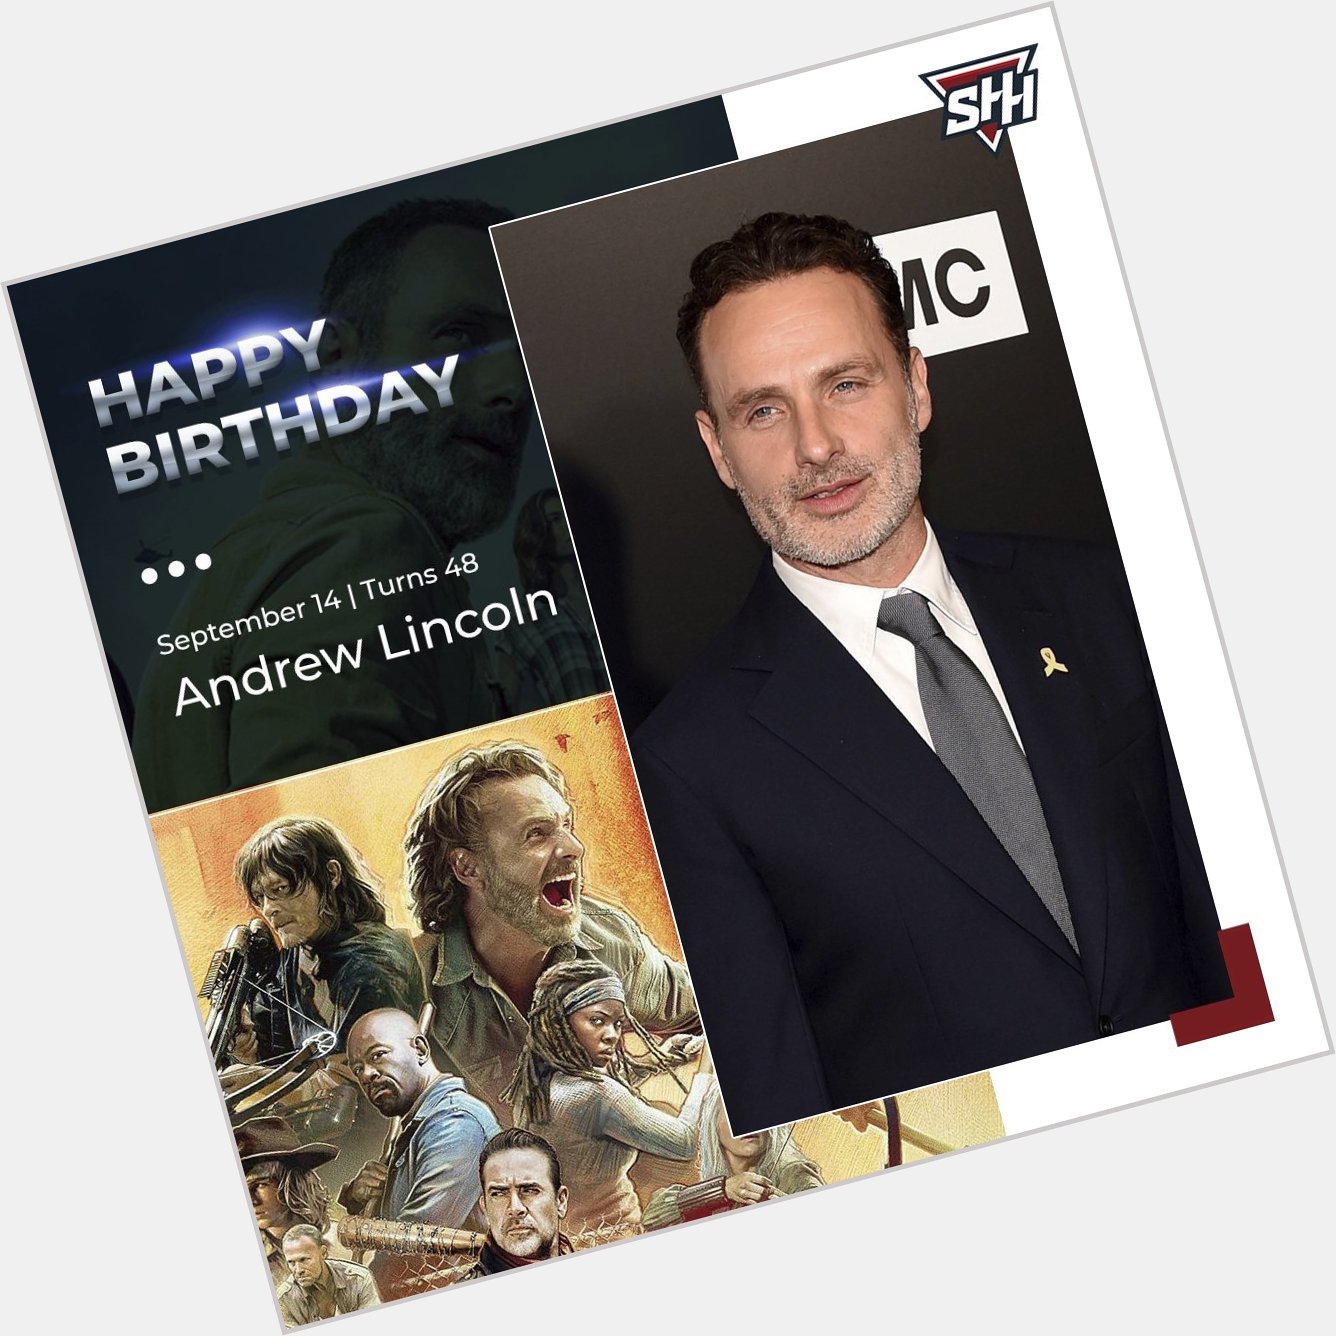 Happy Birthday to Andrew Lincoln! 